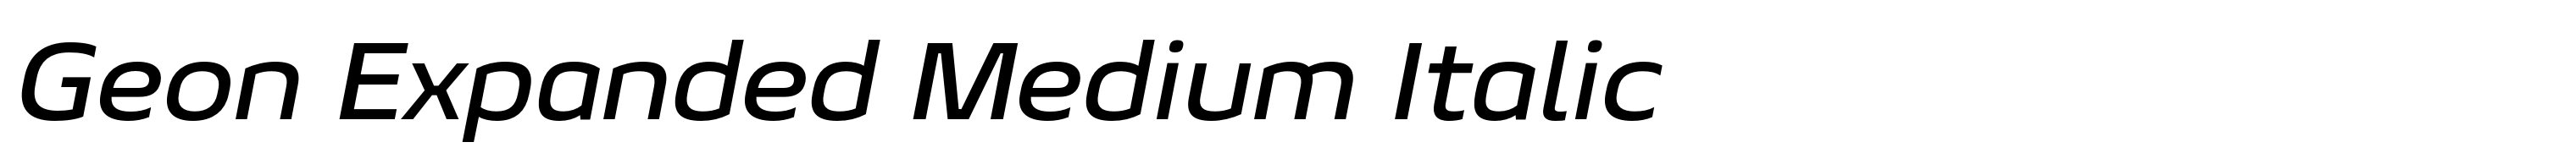 Geon Expanded Medium Italic